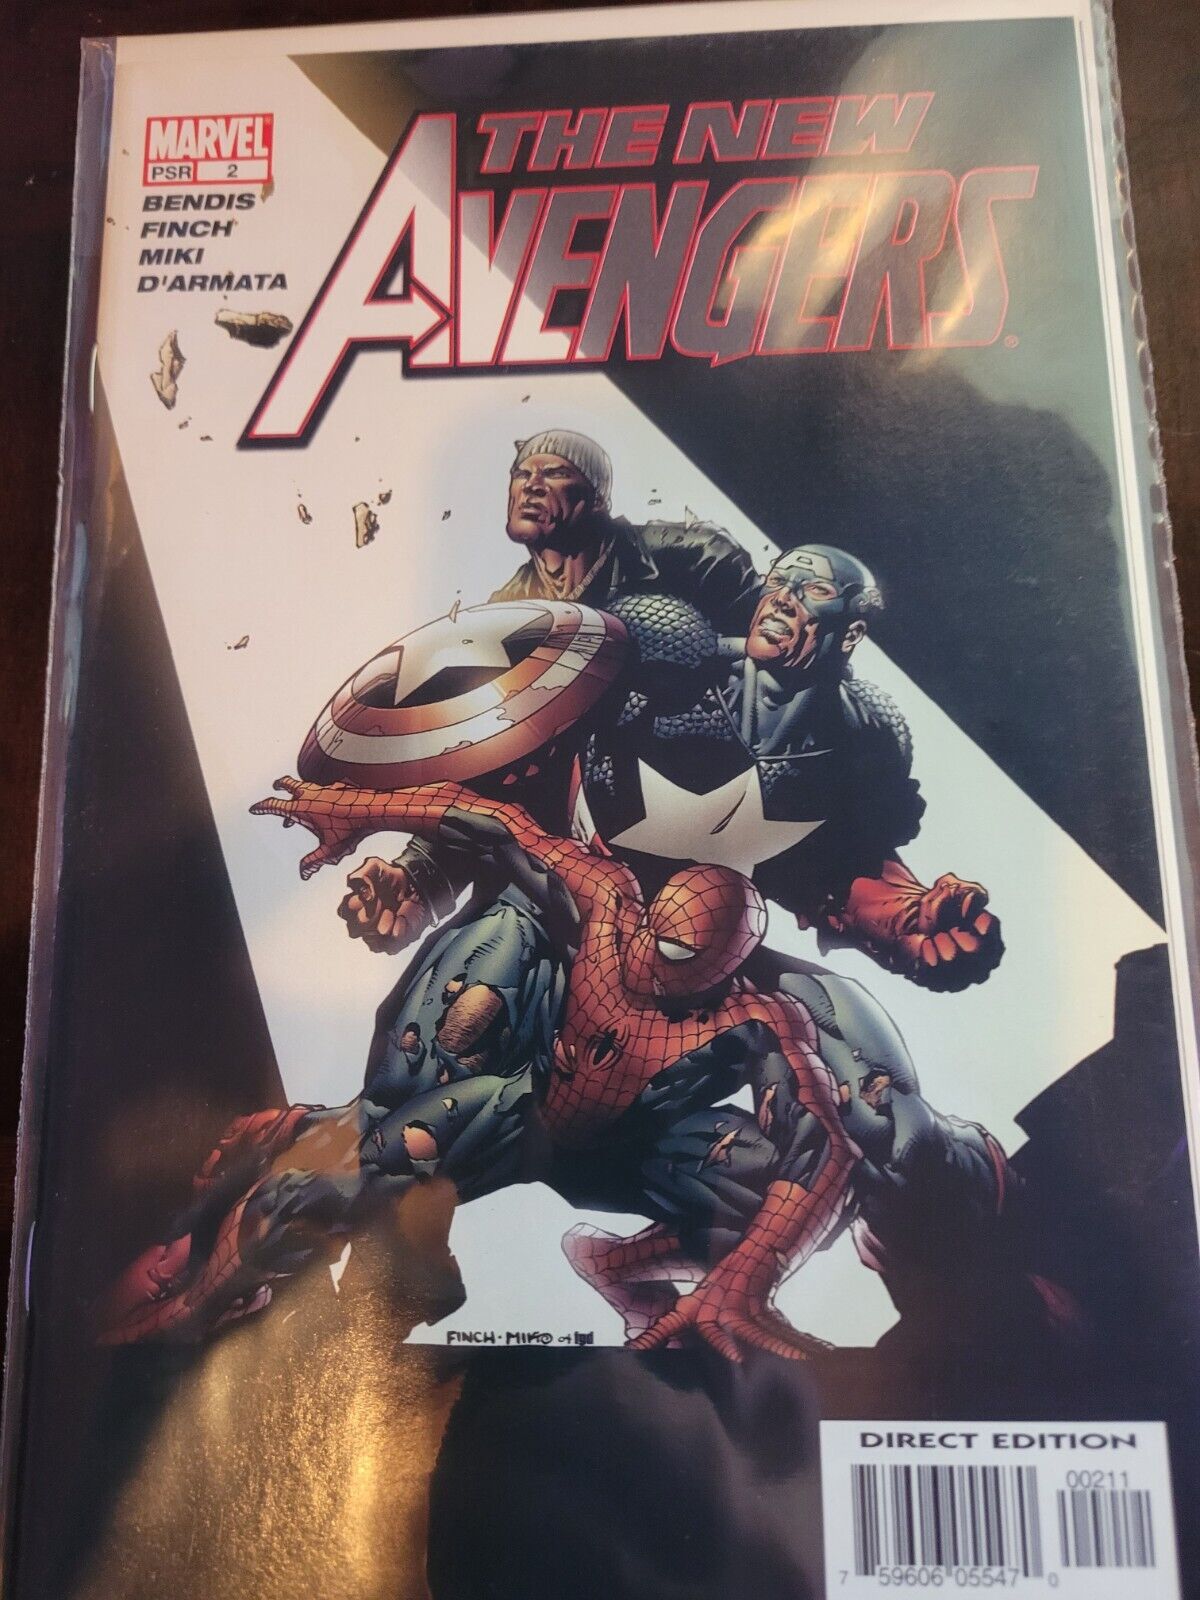 The New Avengers #2 (Marvel Comics February 2005)